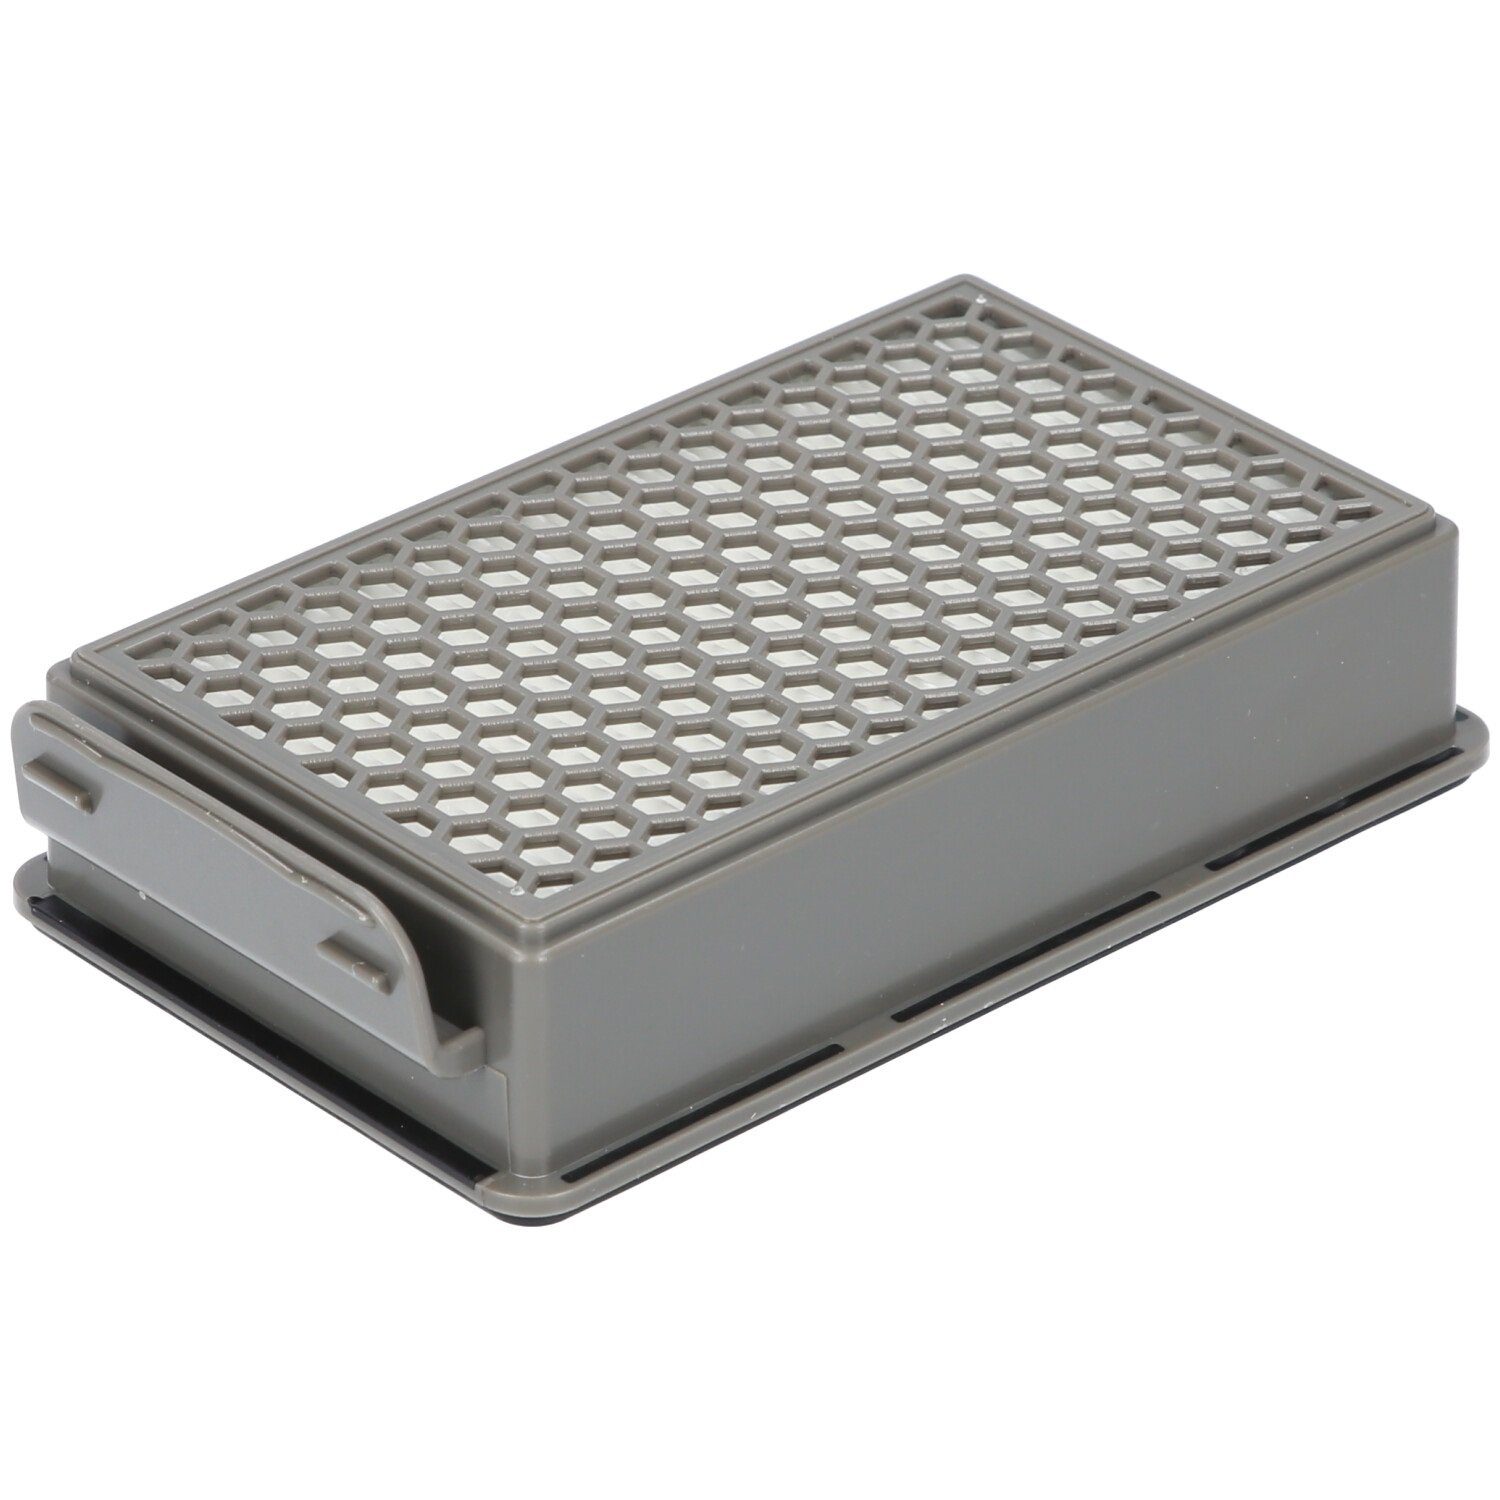 Rundfilter, RO3969EA Alternativ Filterkassette, Compact, Power geeignet Rowenta / McFilter RO3985EA RO3995EA für für Cyclonic, / Filter-Set RO3955EA ZR005901